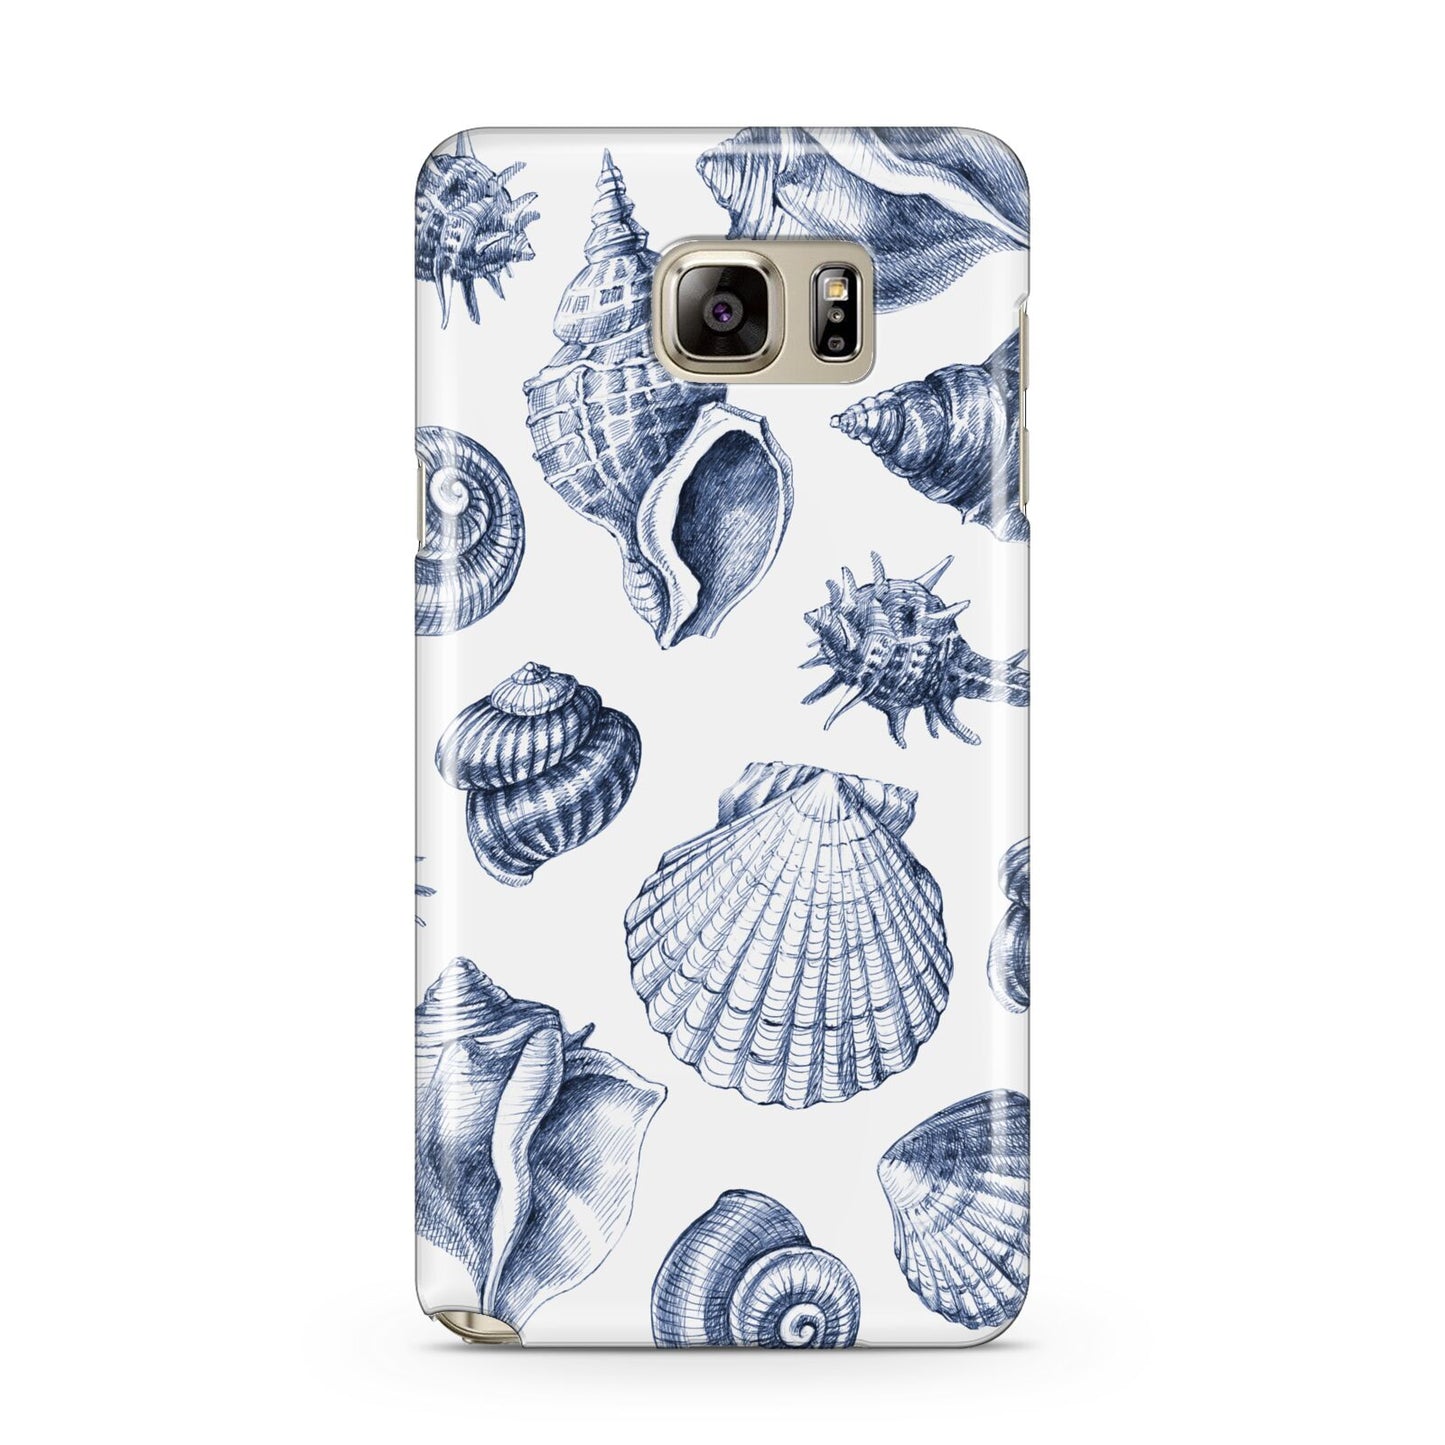 Shell Samsung Galaxy Note 5 Case